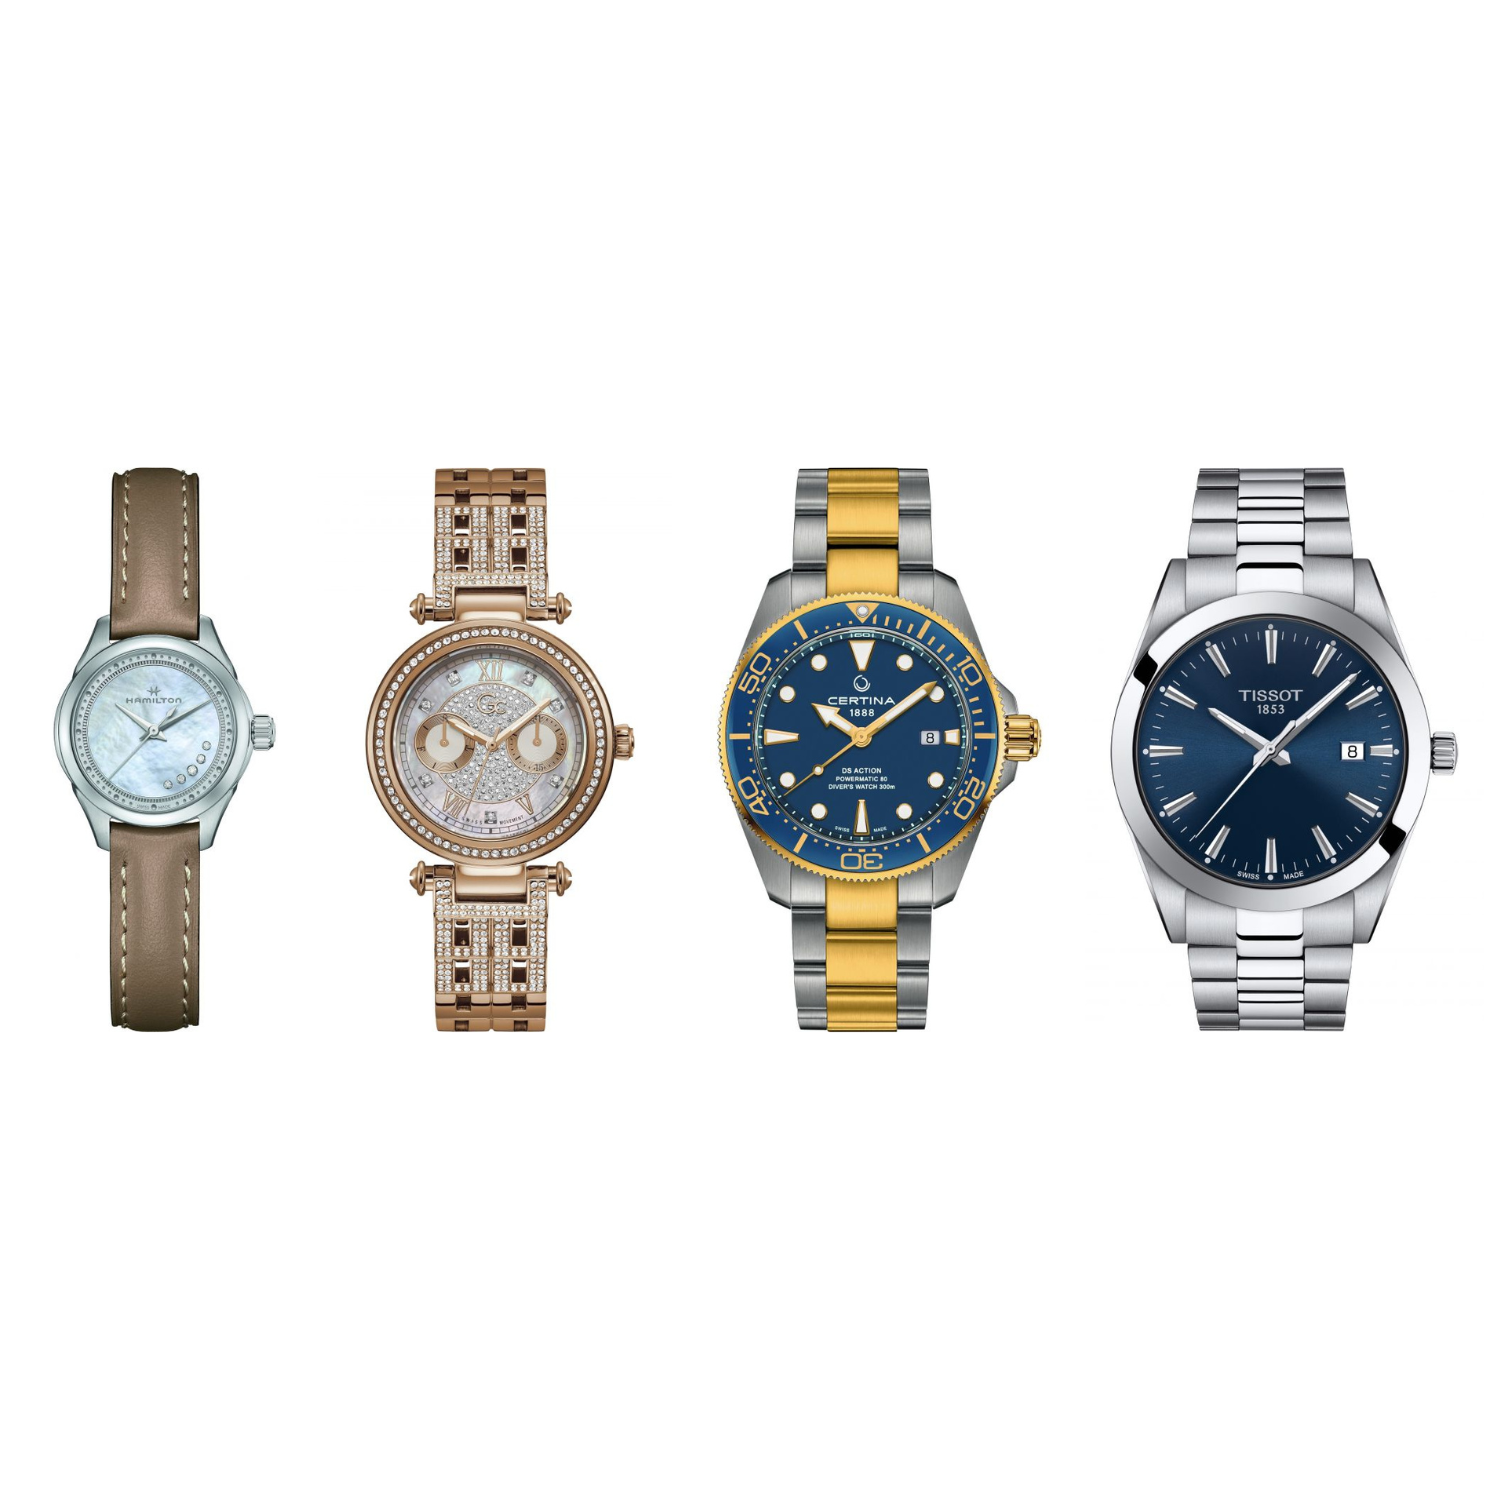 4 watches (2 men's and 2 women's)